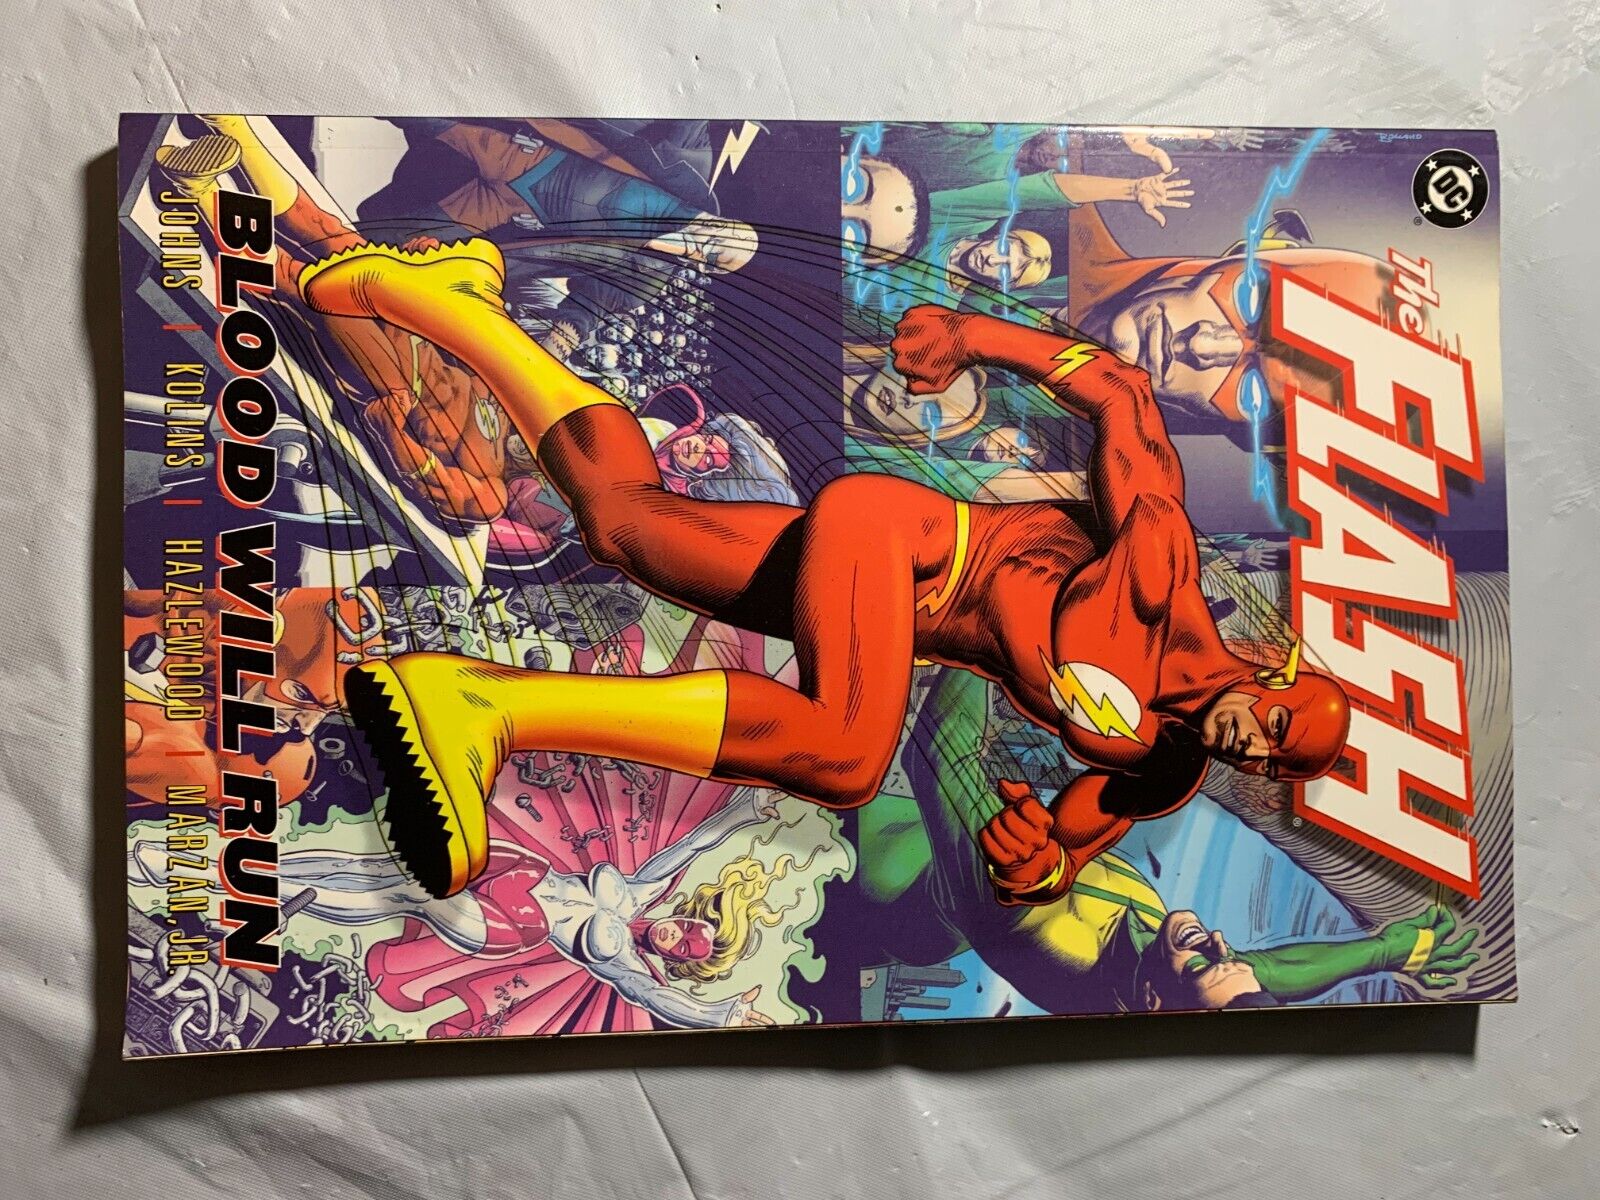 The Flash #1 Blood Will Run (DC Comics May 2002) - 1st Printing